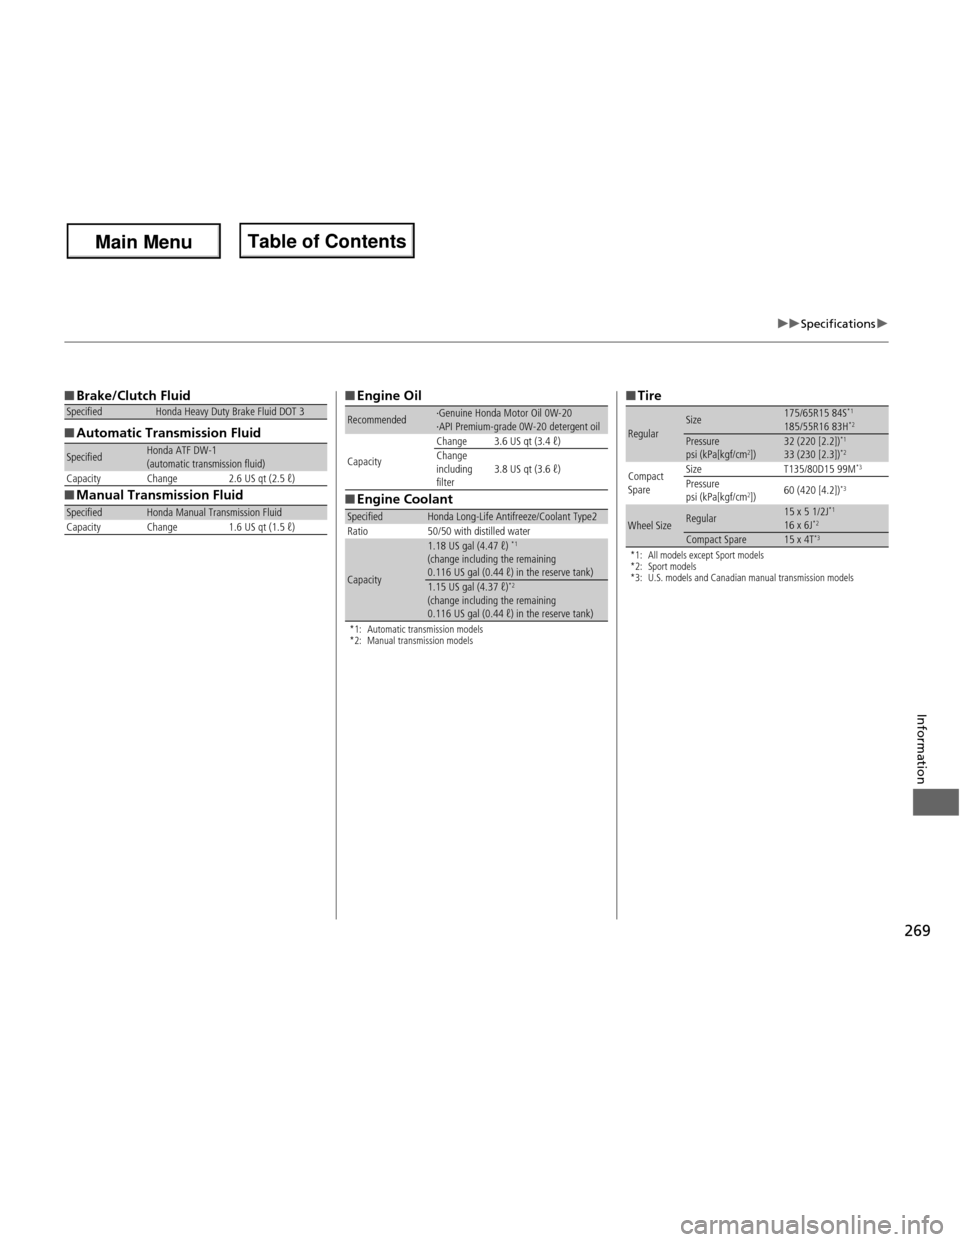 HONDA FIT 2013 3.G User Guide 269
uuSpecificationsu
Information
■Brake/Clutch Fluid
■Automatic Transmission Fluid
■Manual Transmission Fluid
SpecifiedHonda Heavy Duty Brake Fluid DOT 3
SpecifiedHonda ATF DW-1 
(automatic tra